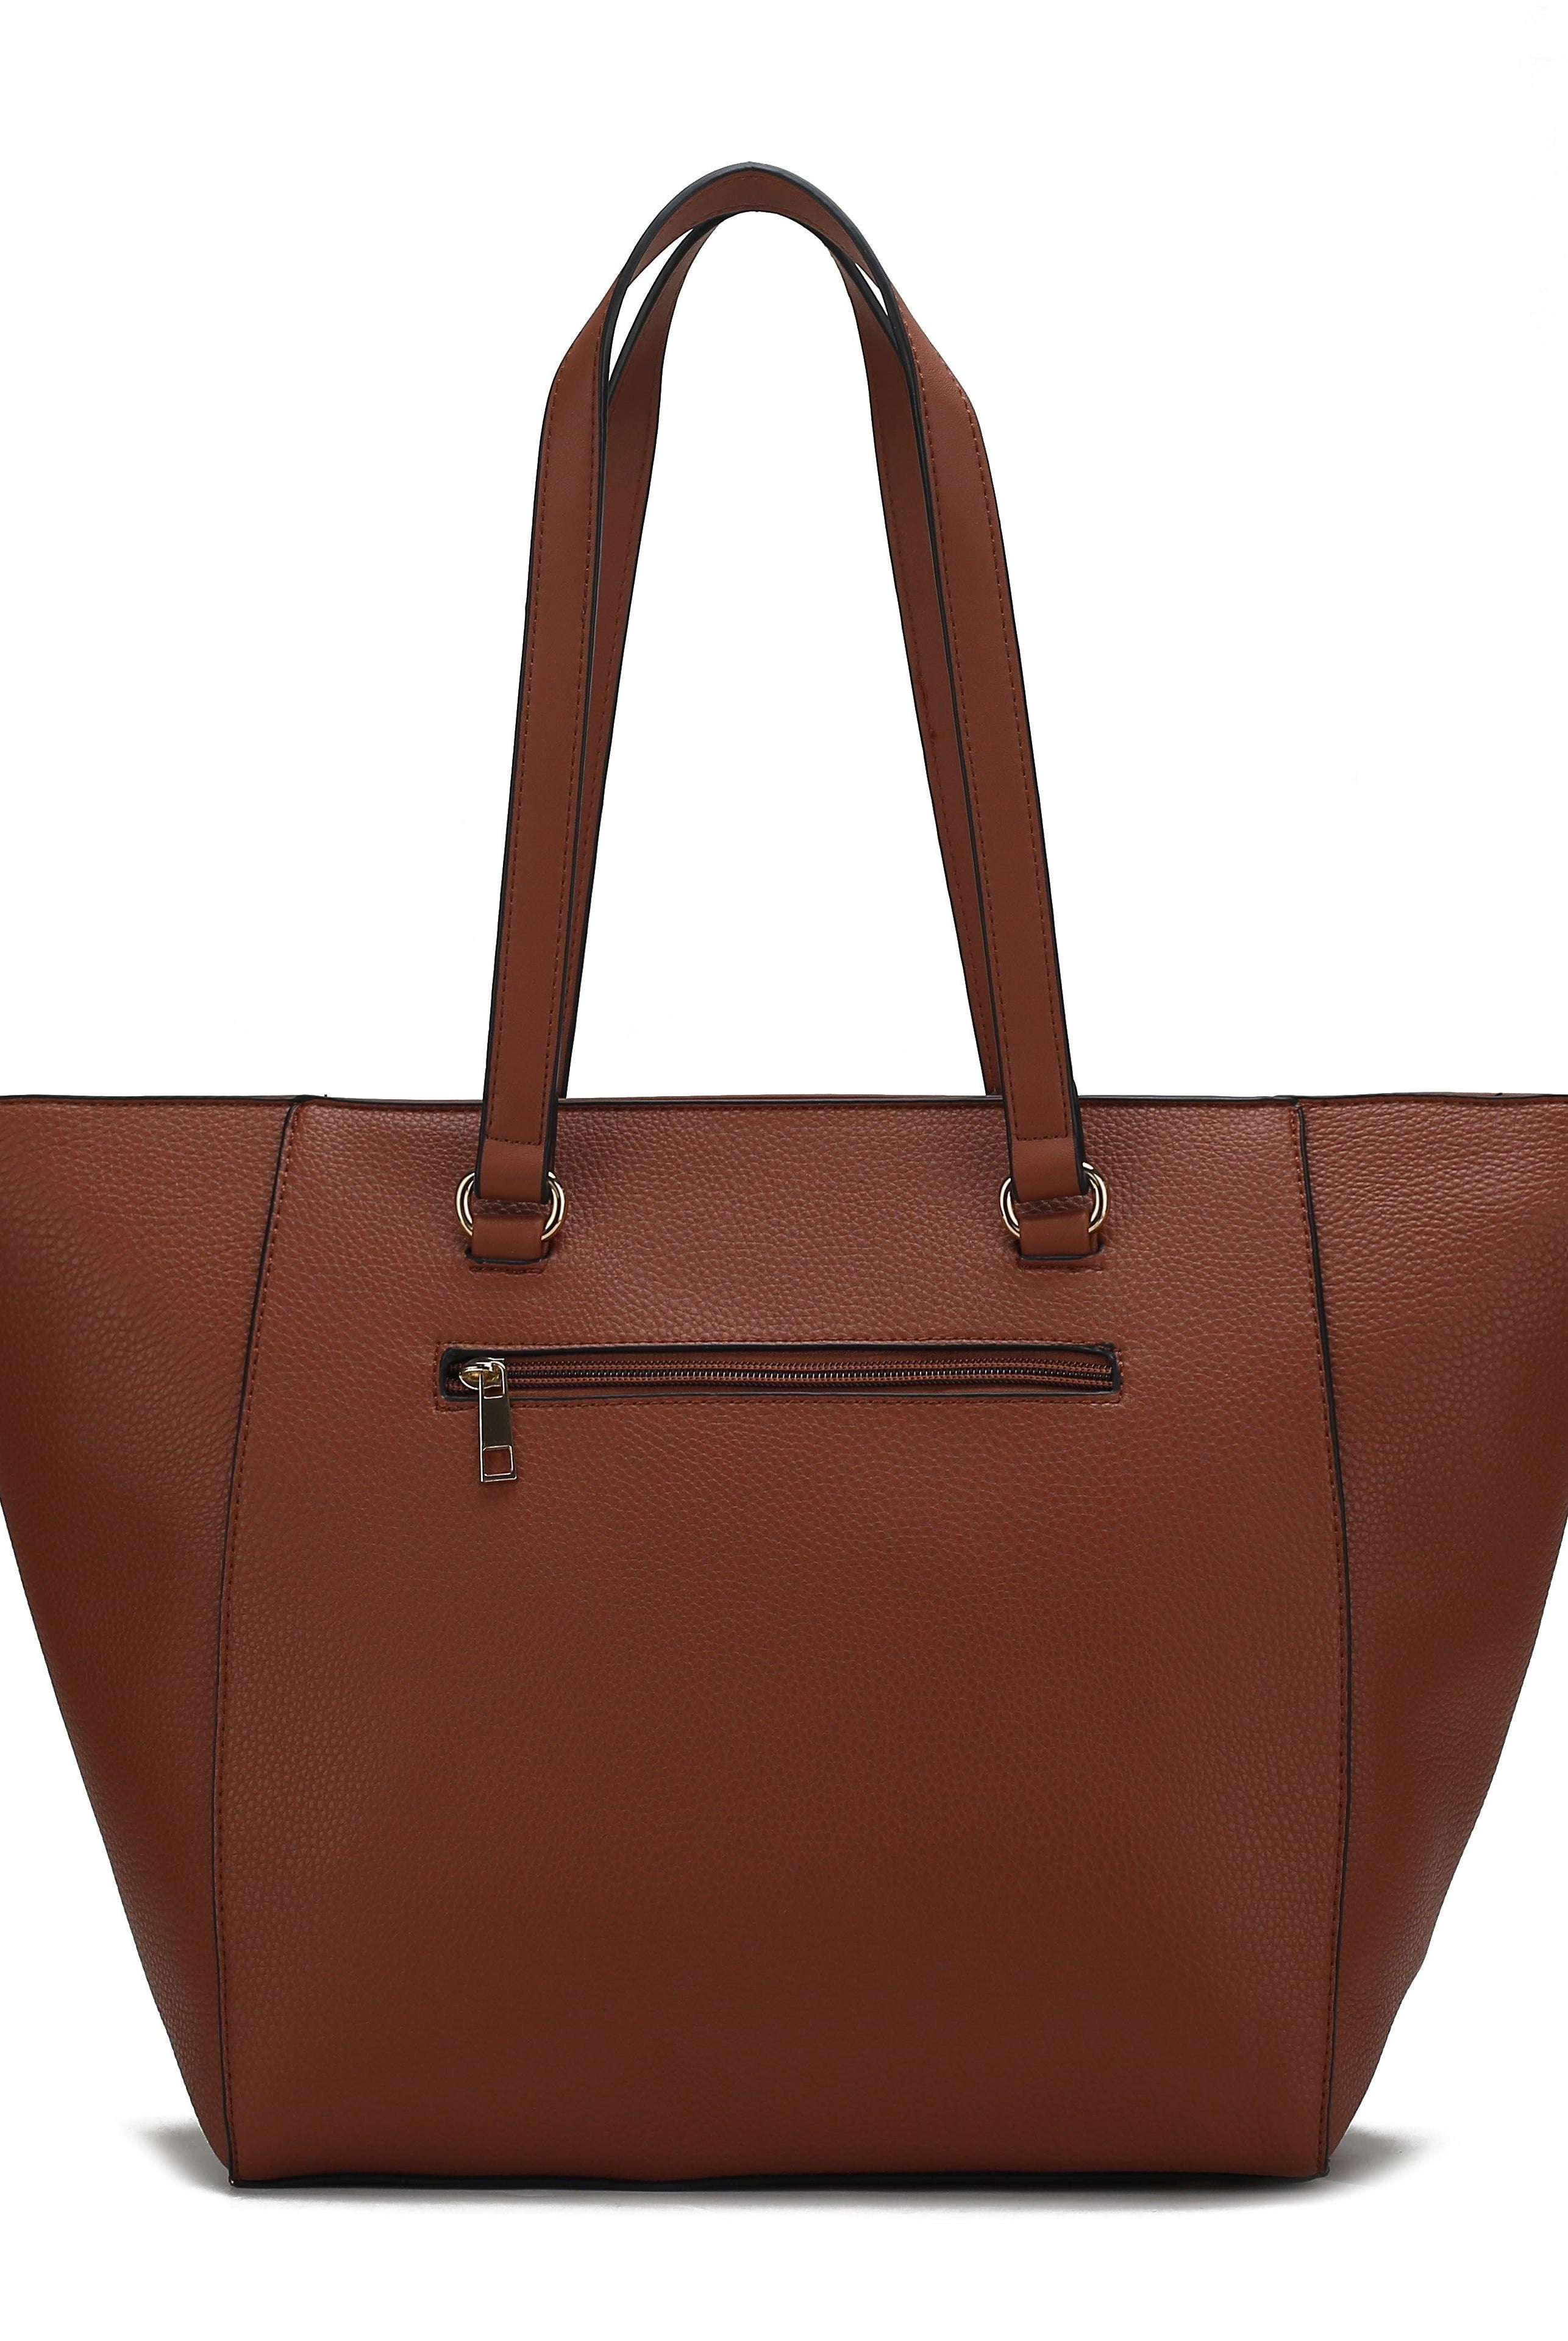 Wallets, Handbags & Accessories Alexandra Vegan Leather Women Tote Handbag With Wallet